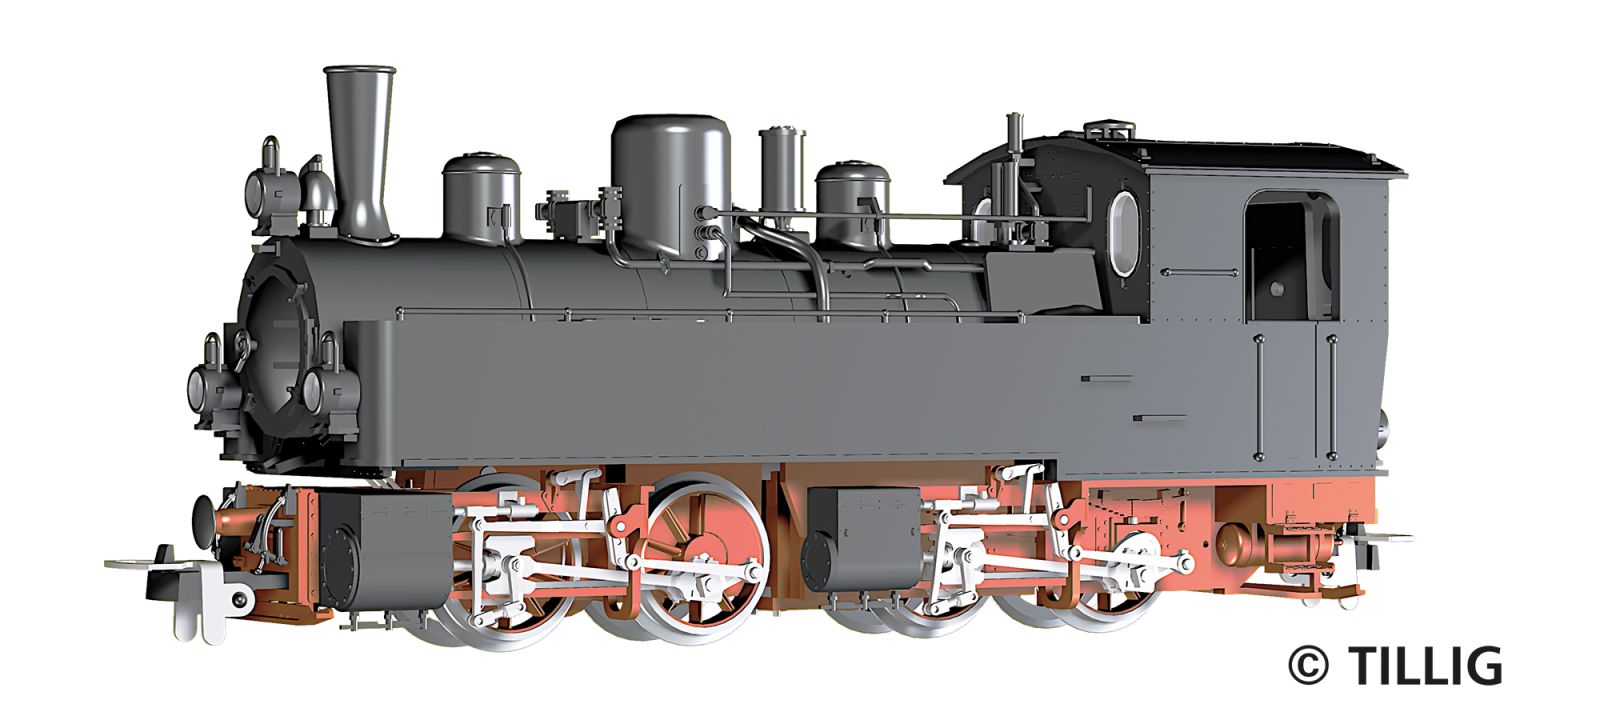 Steam locomotive NWE